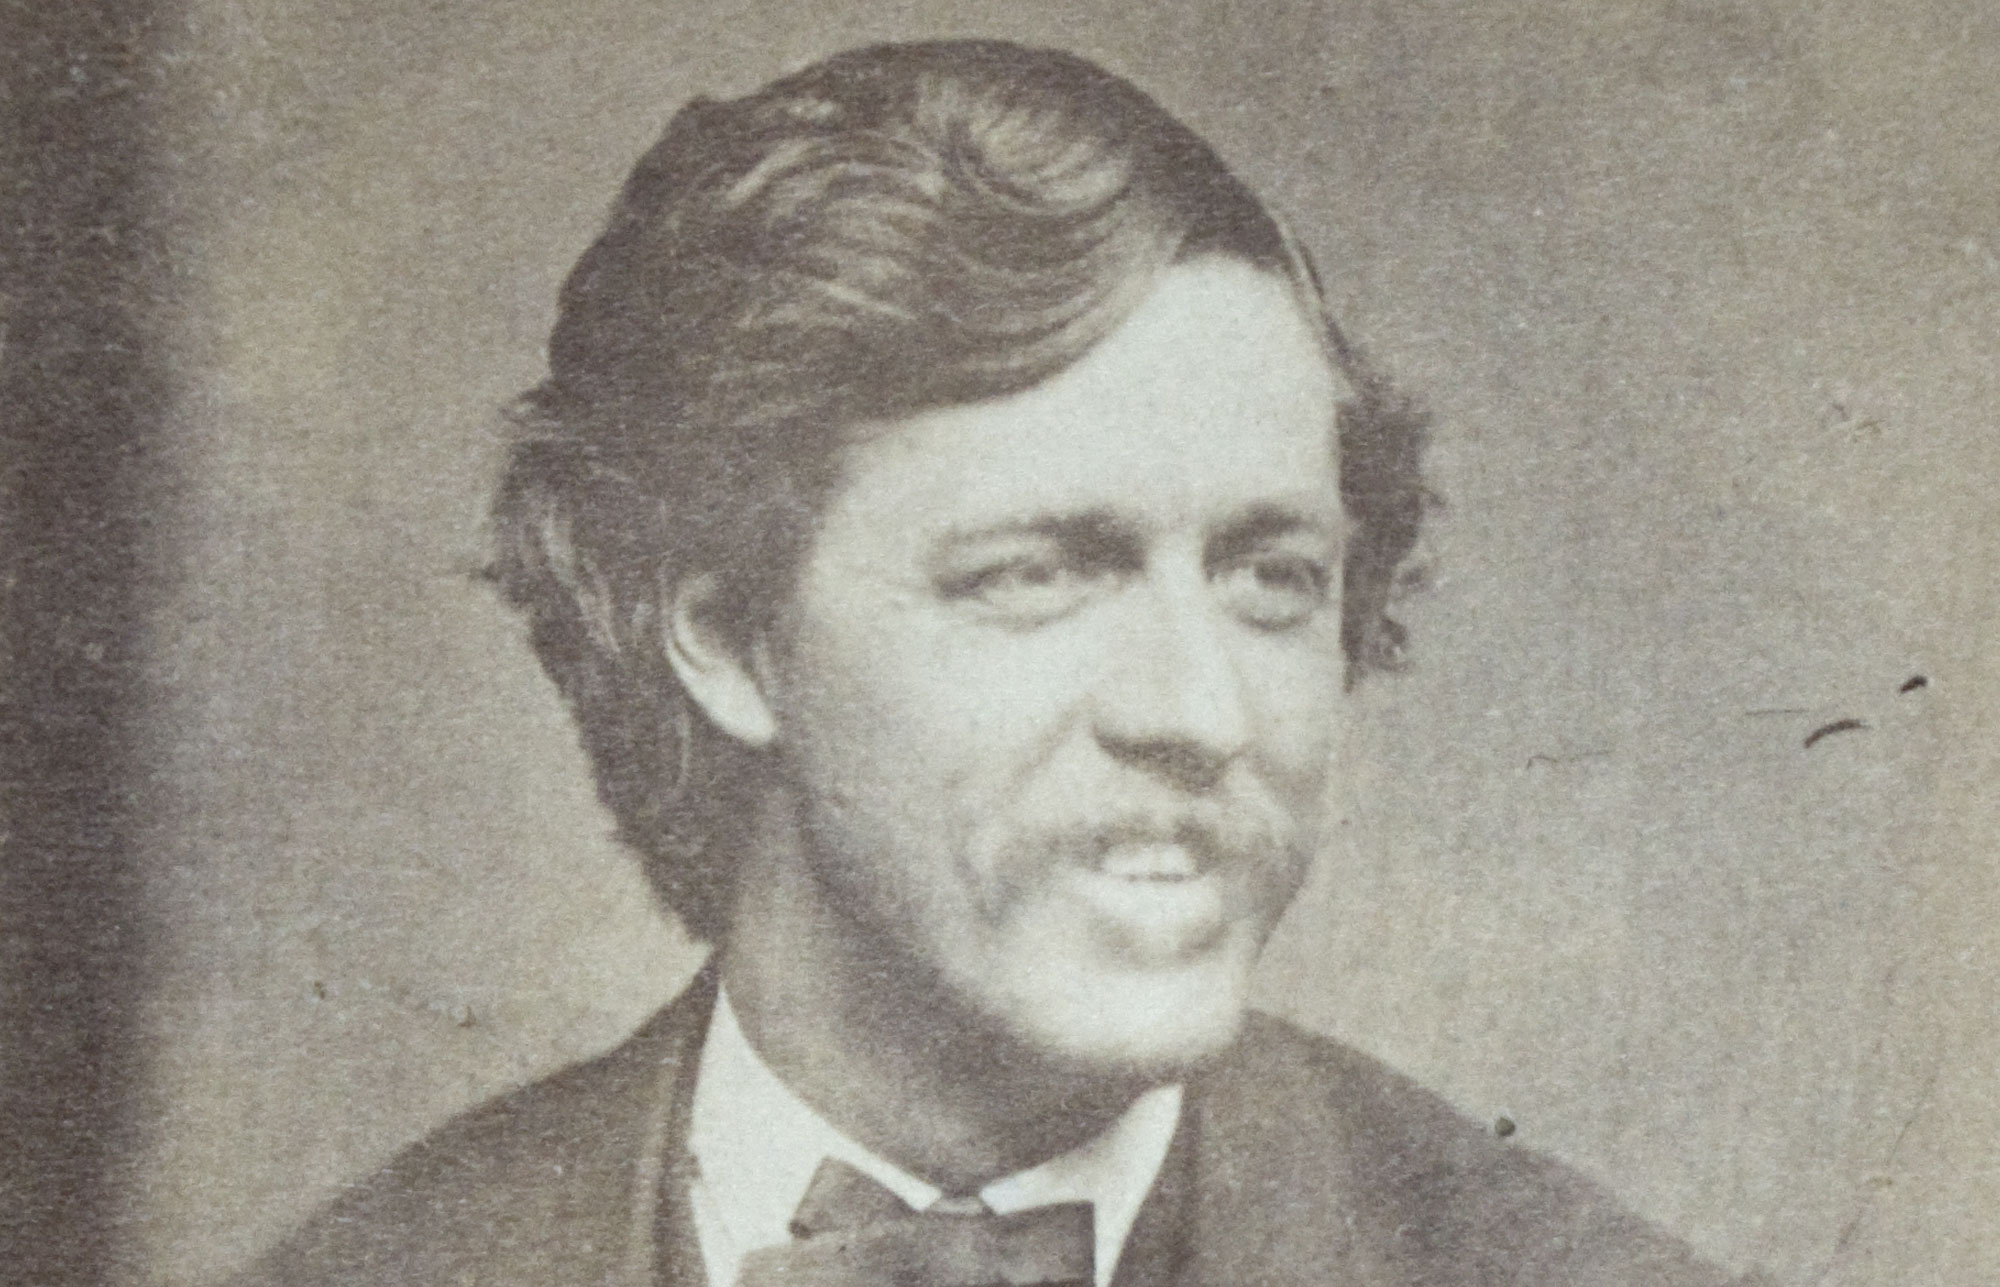 Self Portrait of William Henry Jackson